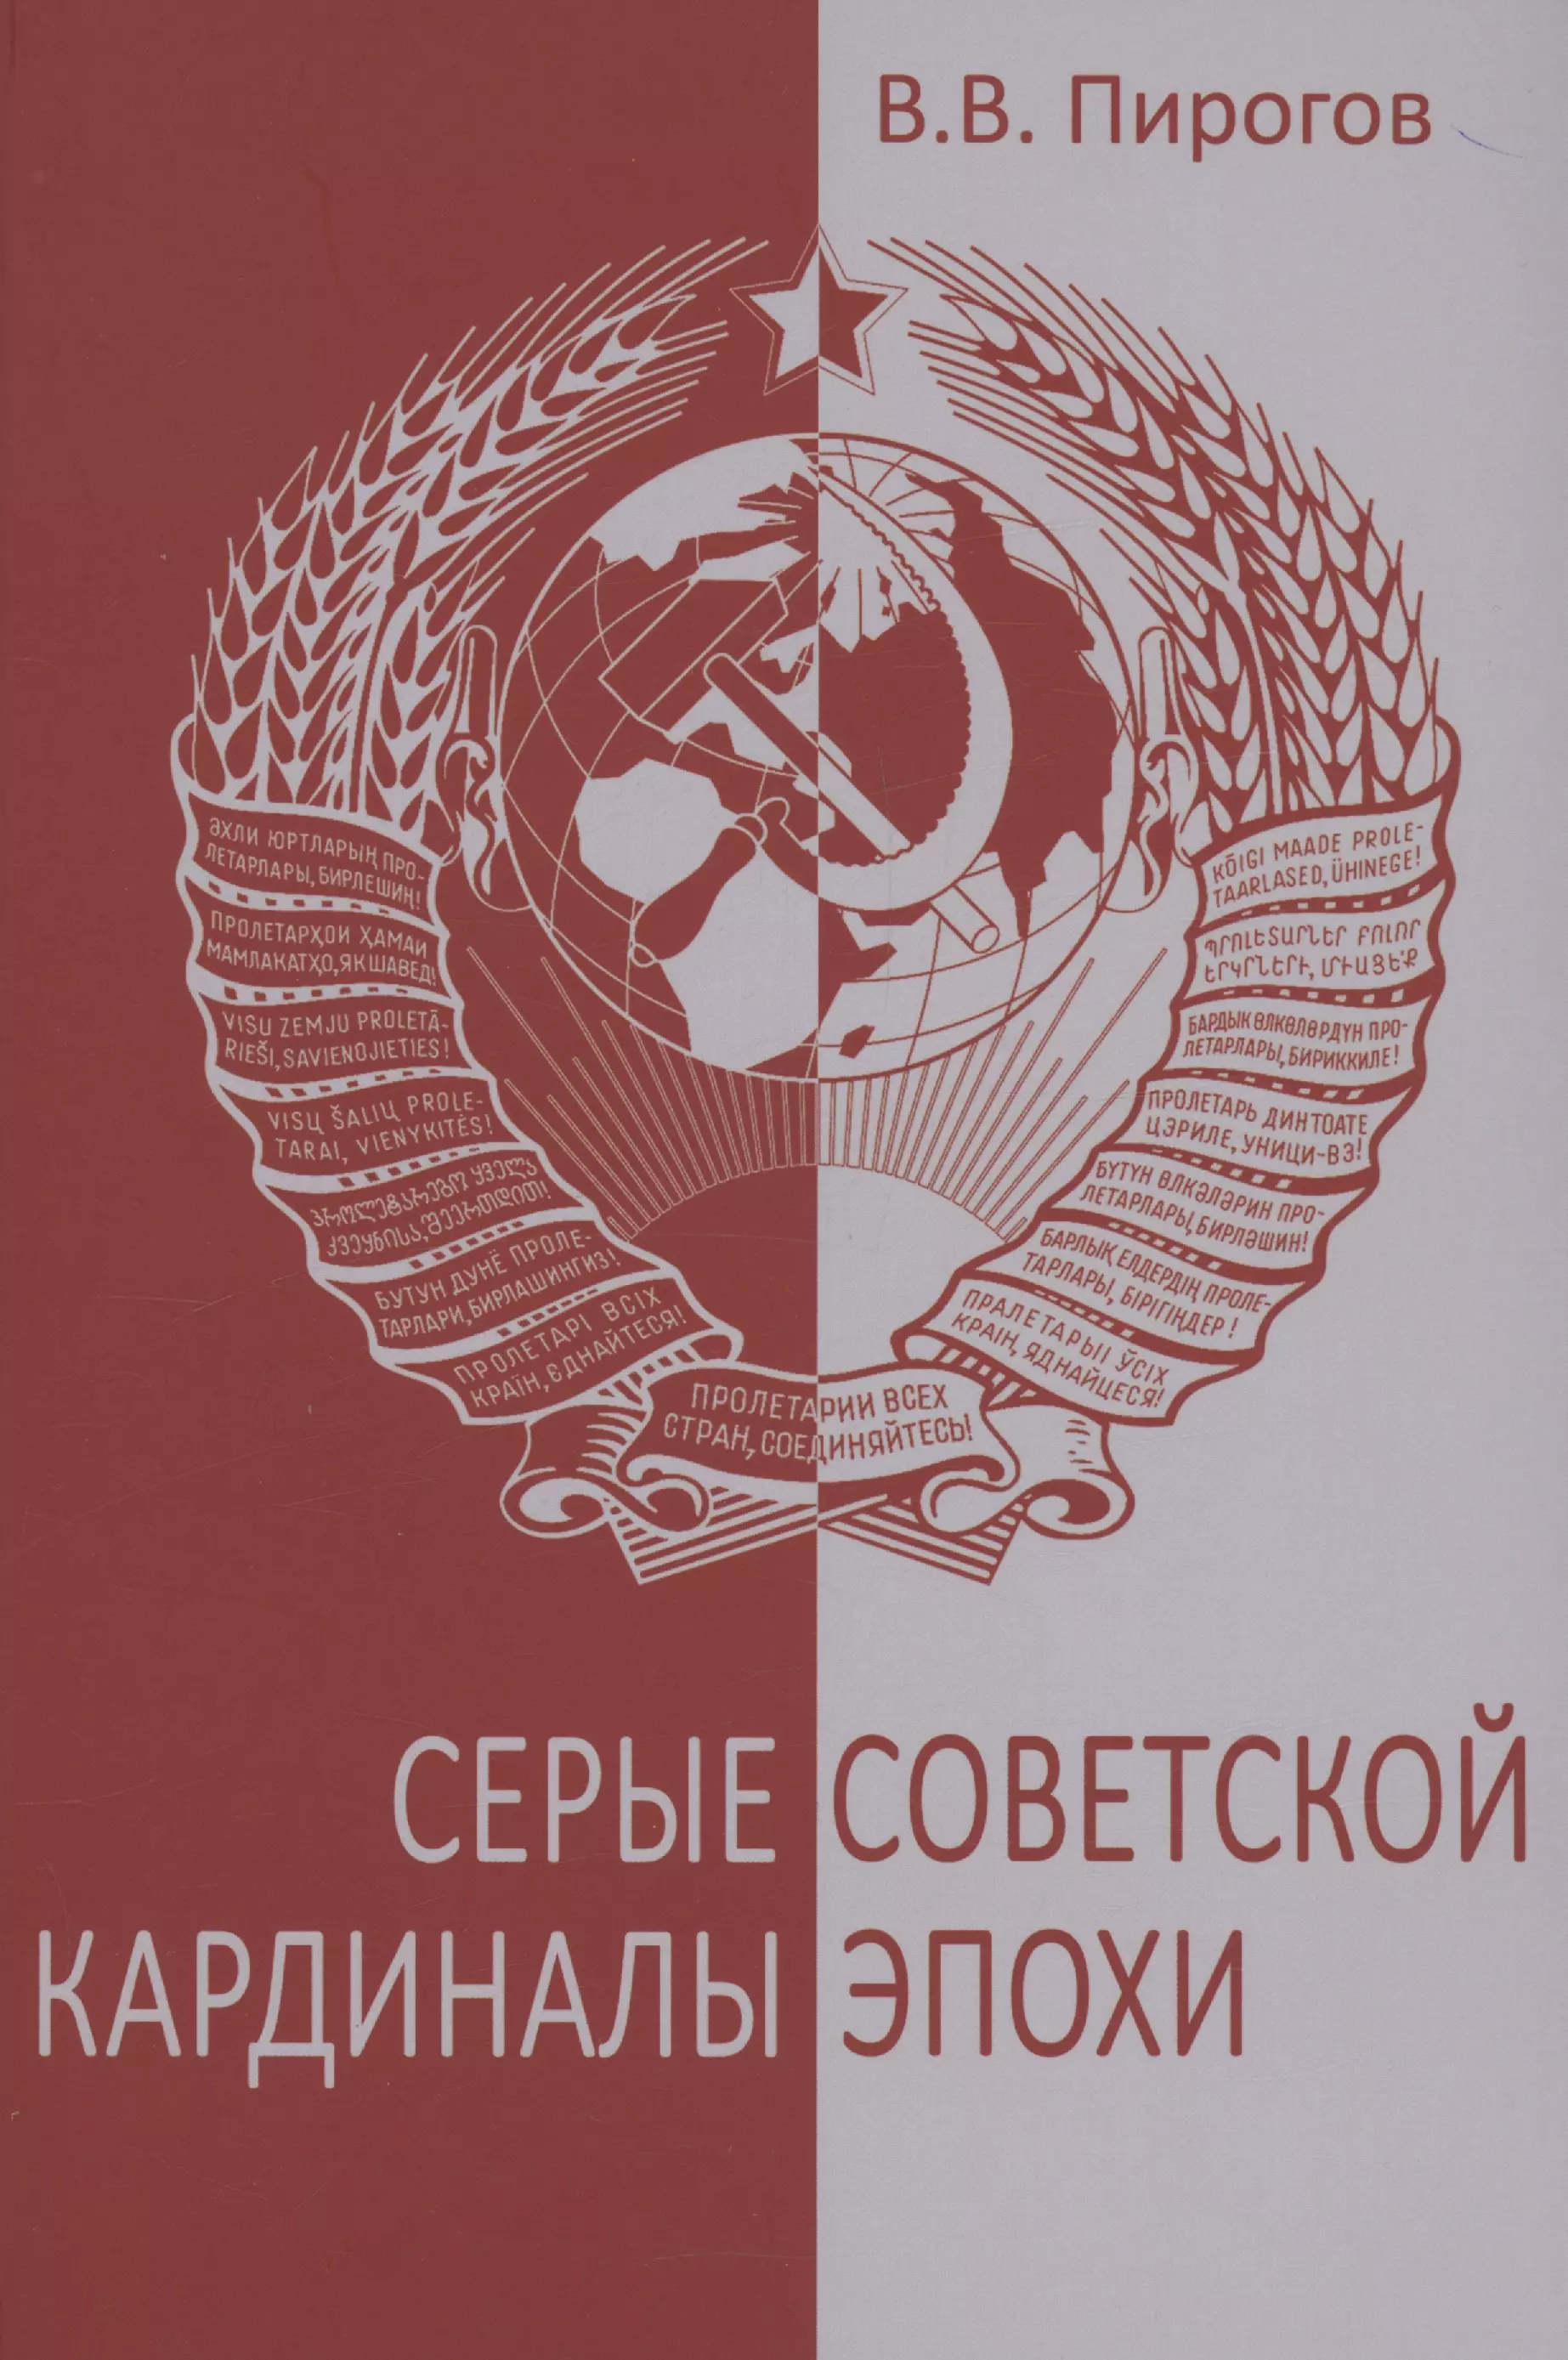 Серые кардиналы советской эпохи мифы советской эпохи